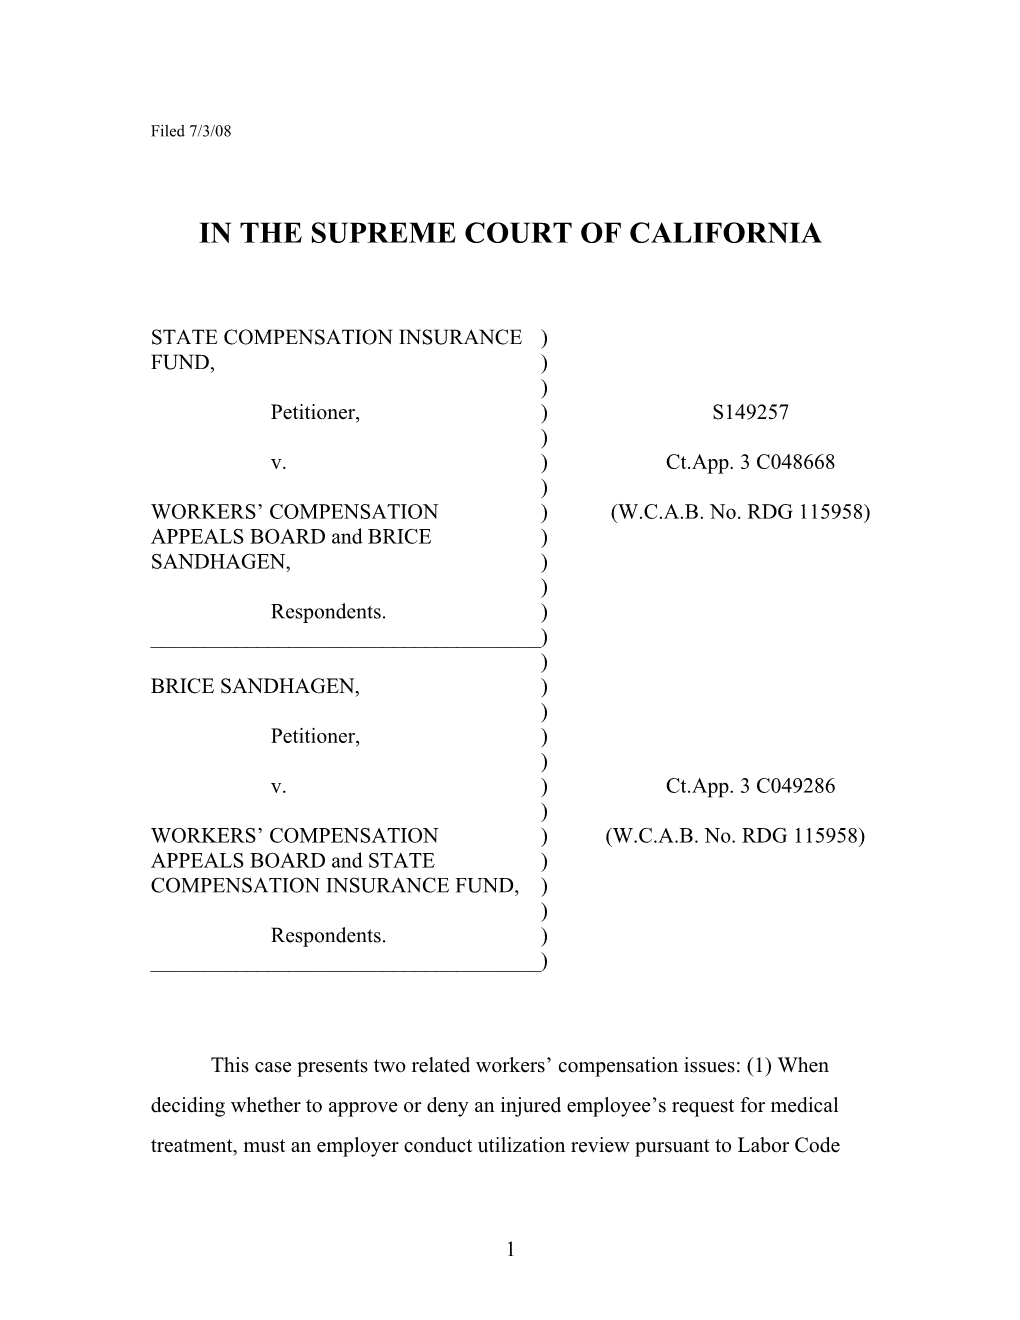 In the Supreme Court of California s2